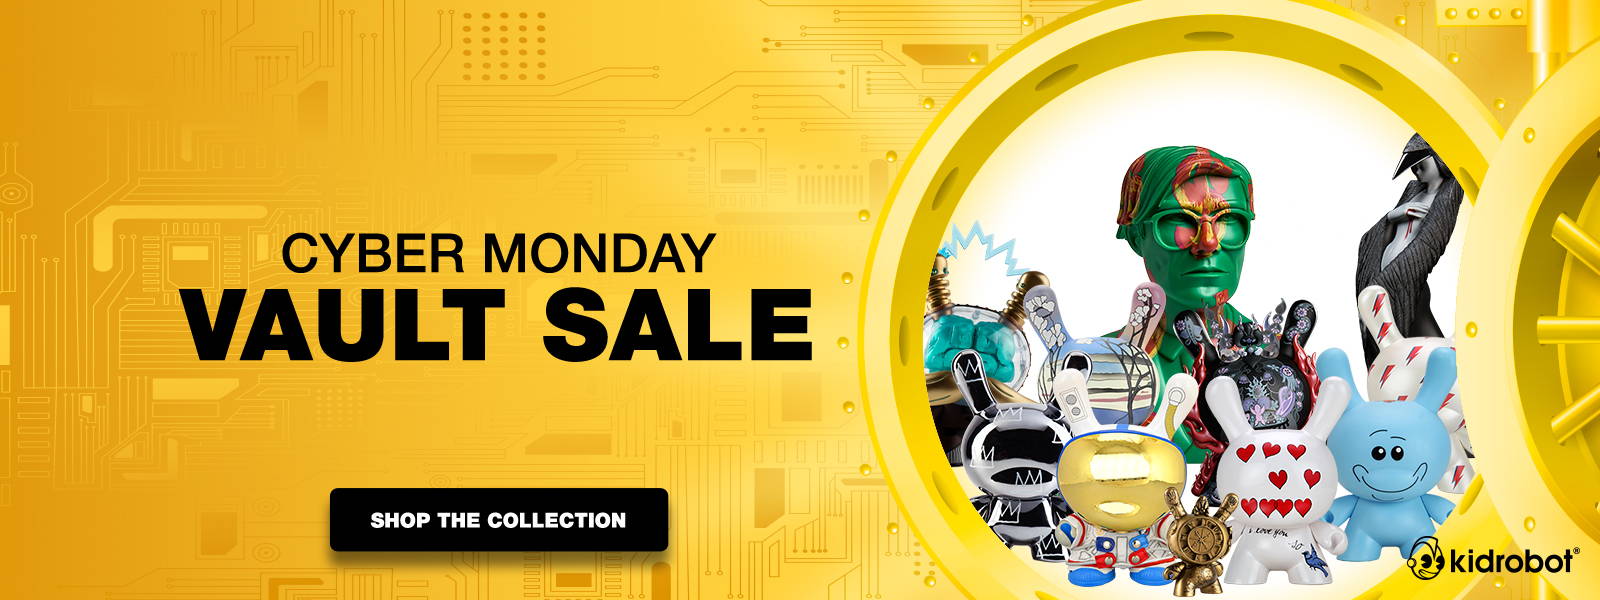 Cyber Monday Vault Sale Drop 3 at Kidrobot.com